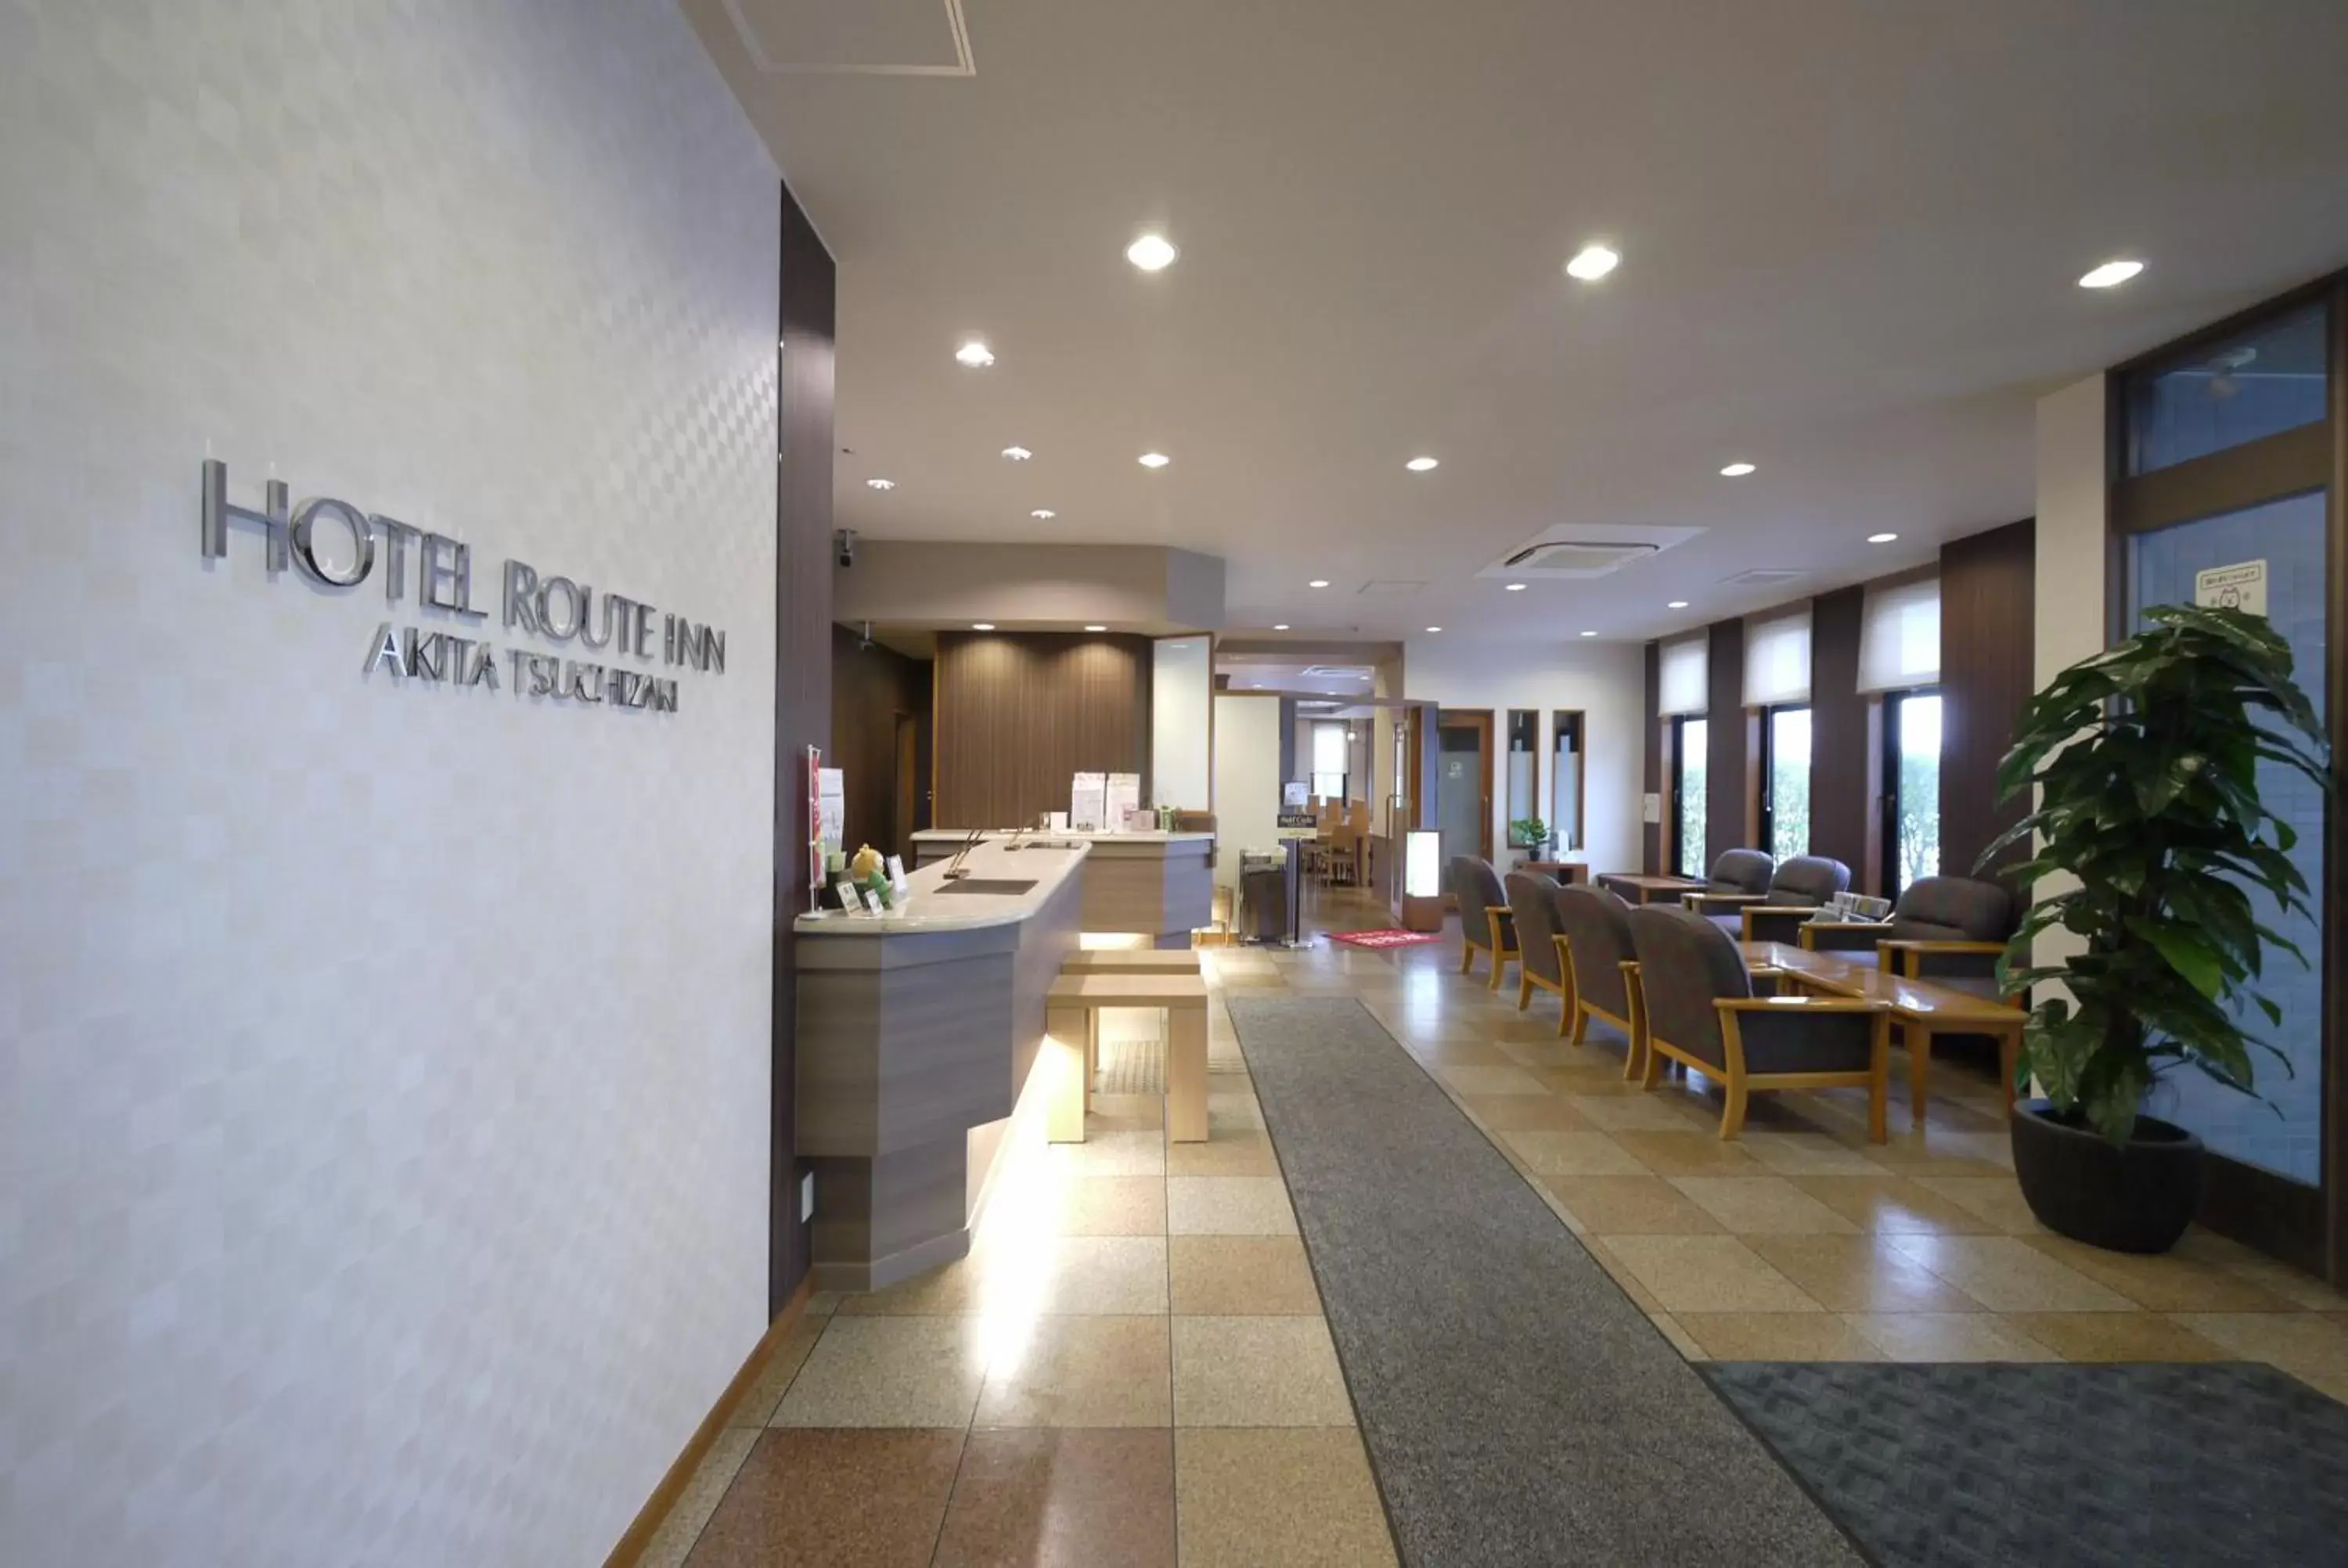 Lobby or reception, Lobby/Reception in Hotel Route-Inn Akita Tsuchizaki